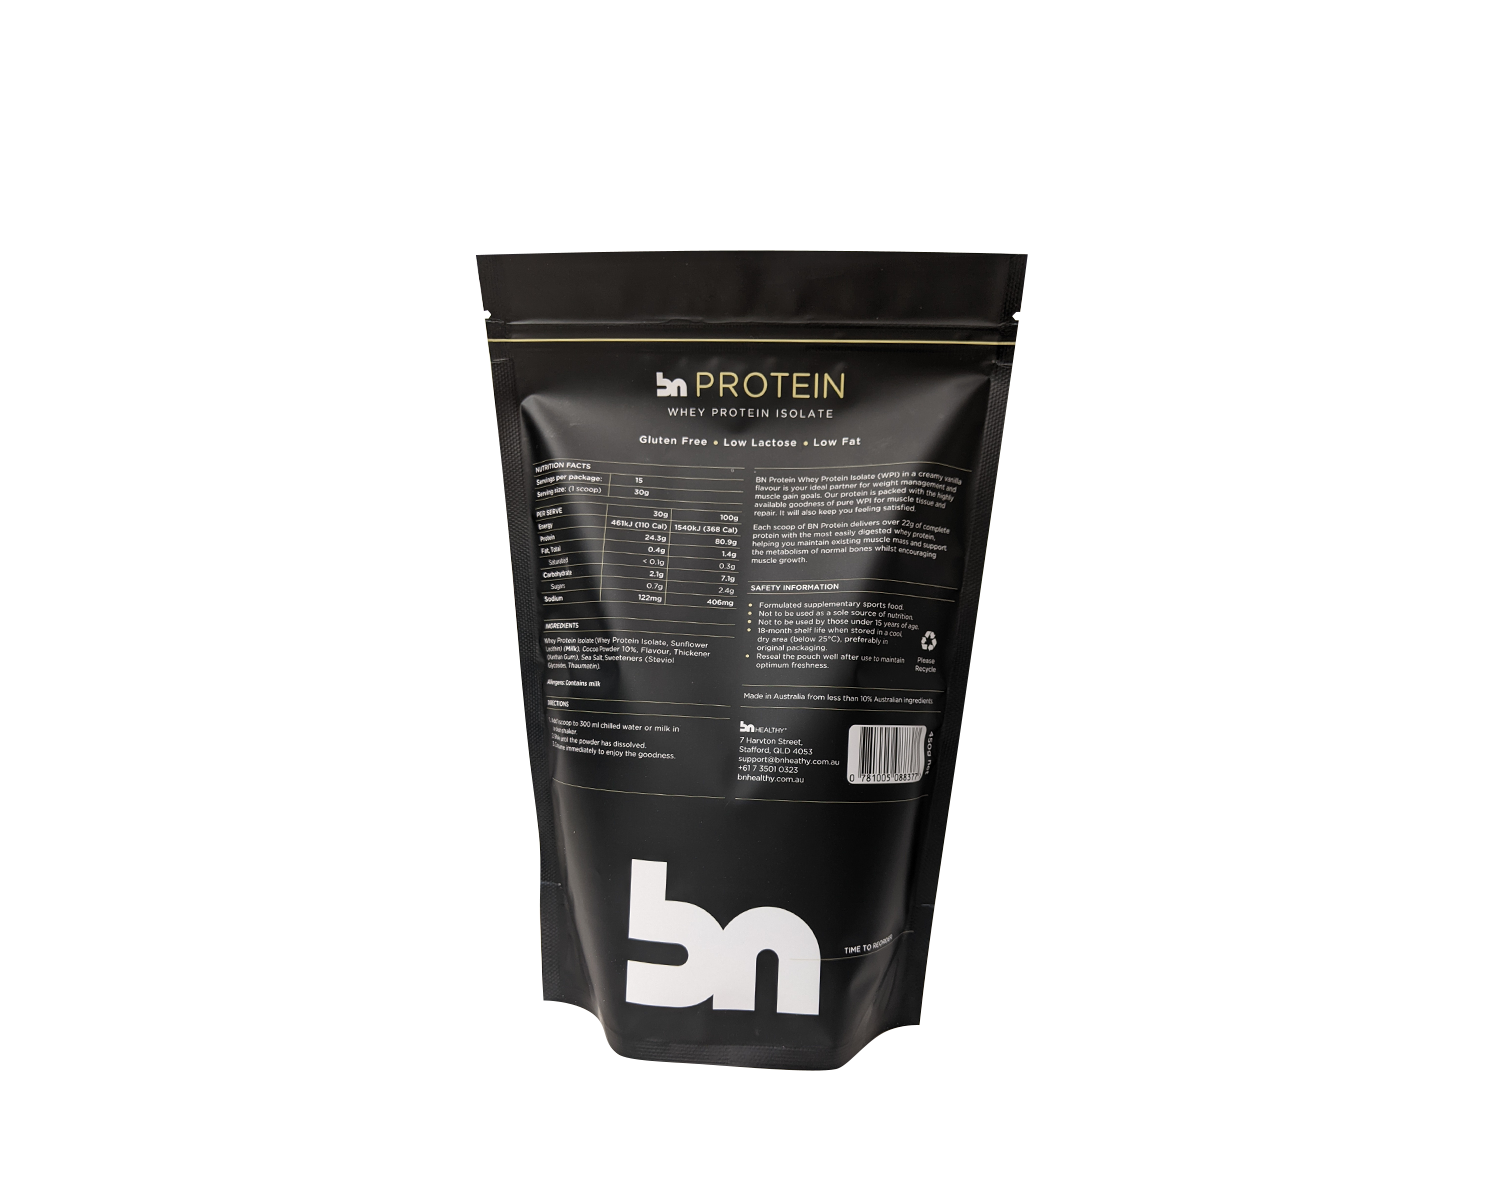 BN Protein - Flavoured WPI Powder vanilla flavour cover back